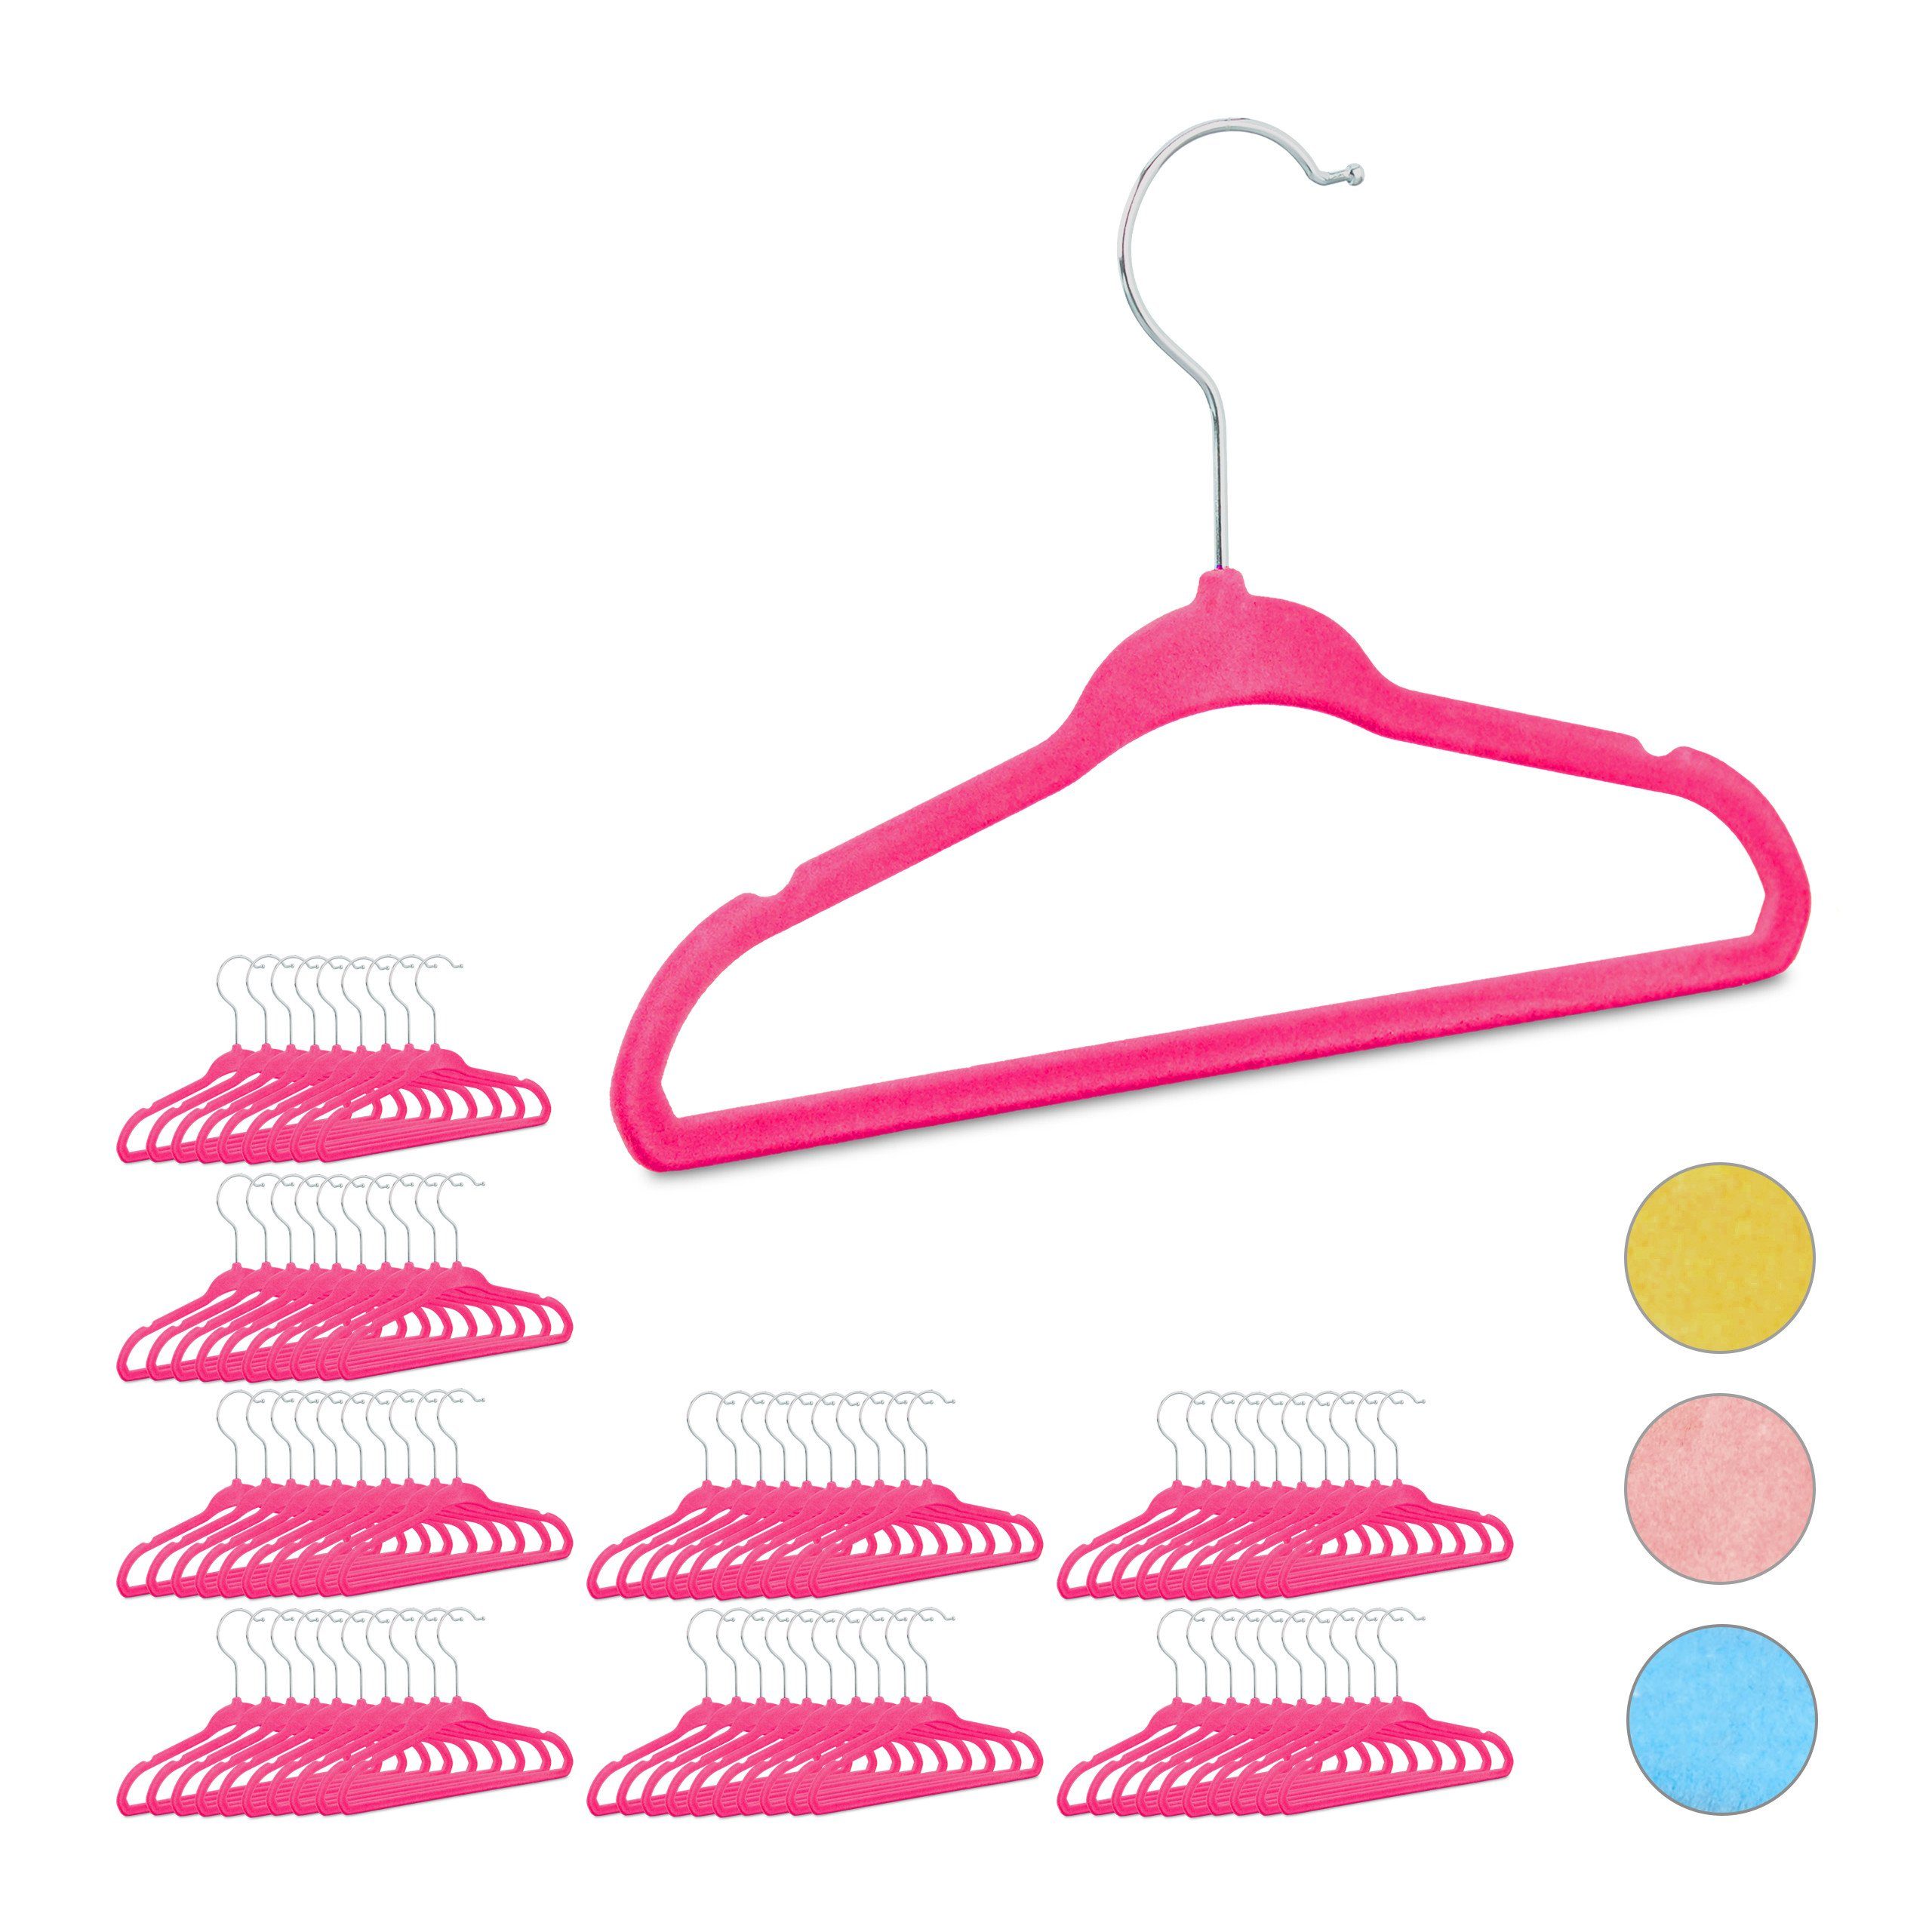 Rosa Kleiderbügel online kaufen » Pinke Kleiderbügel